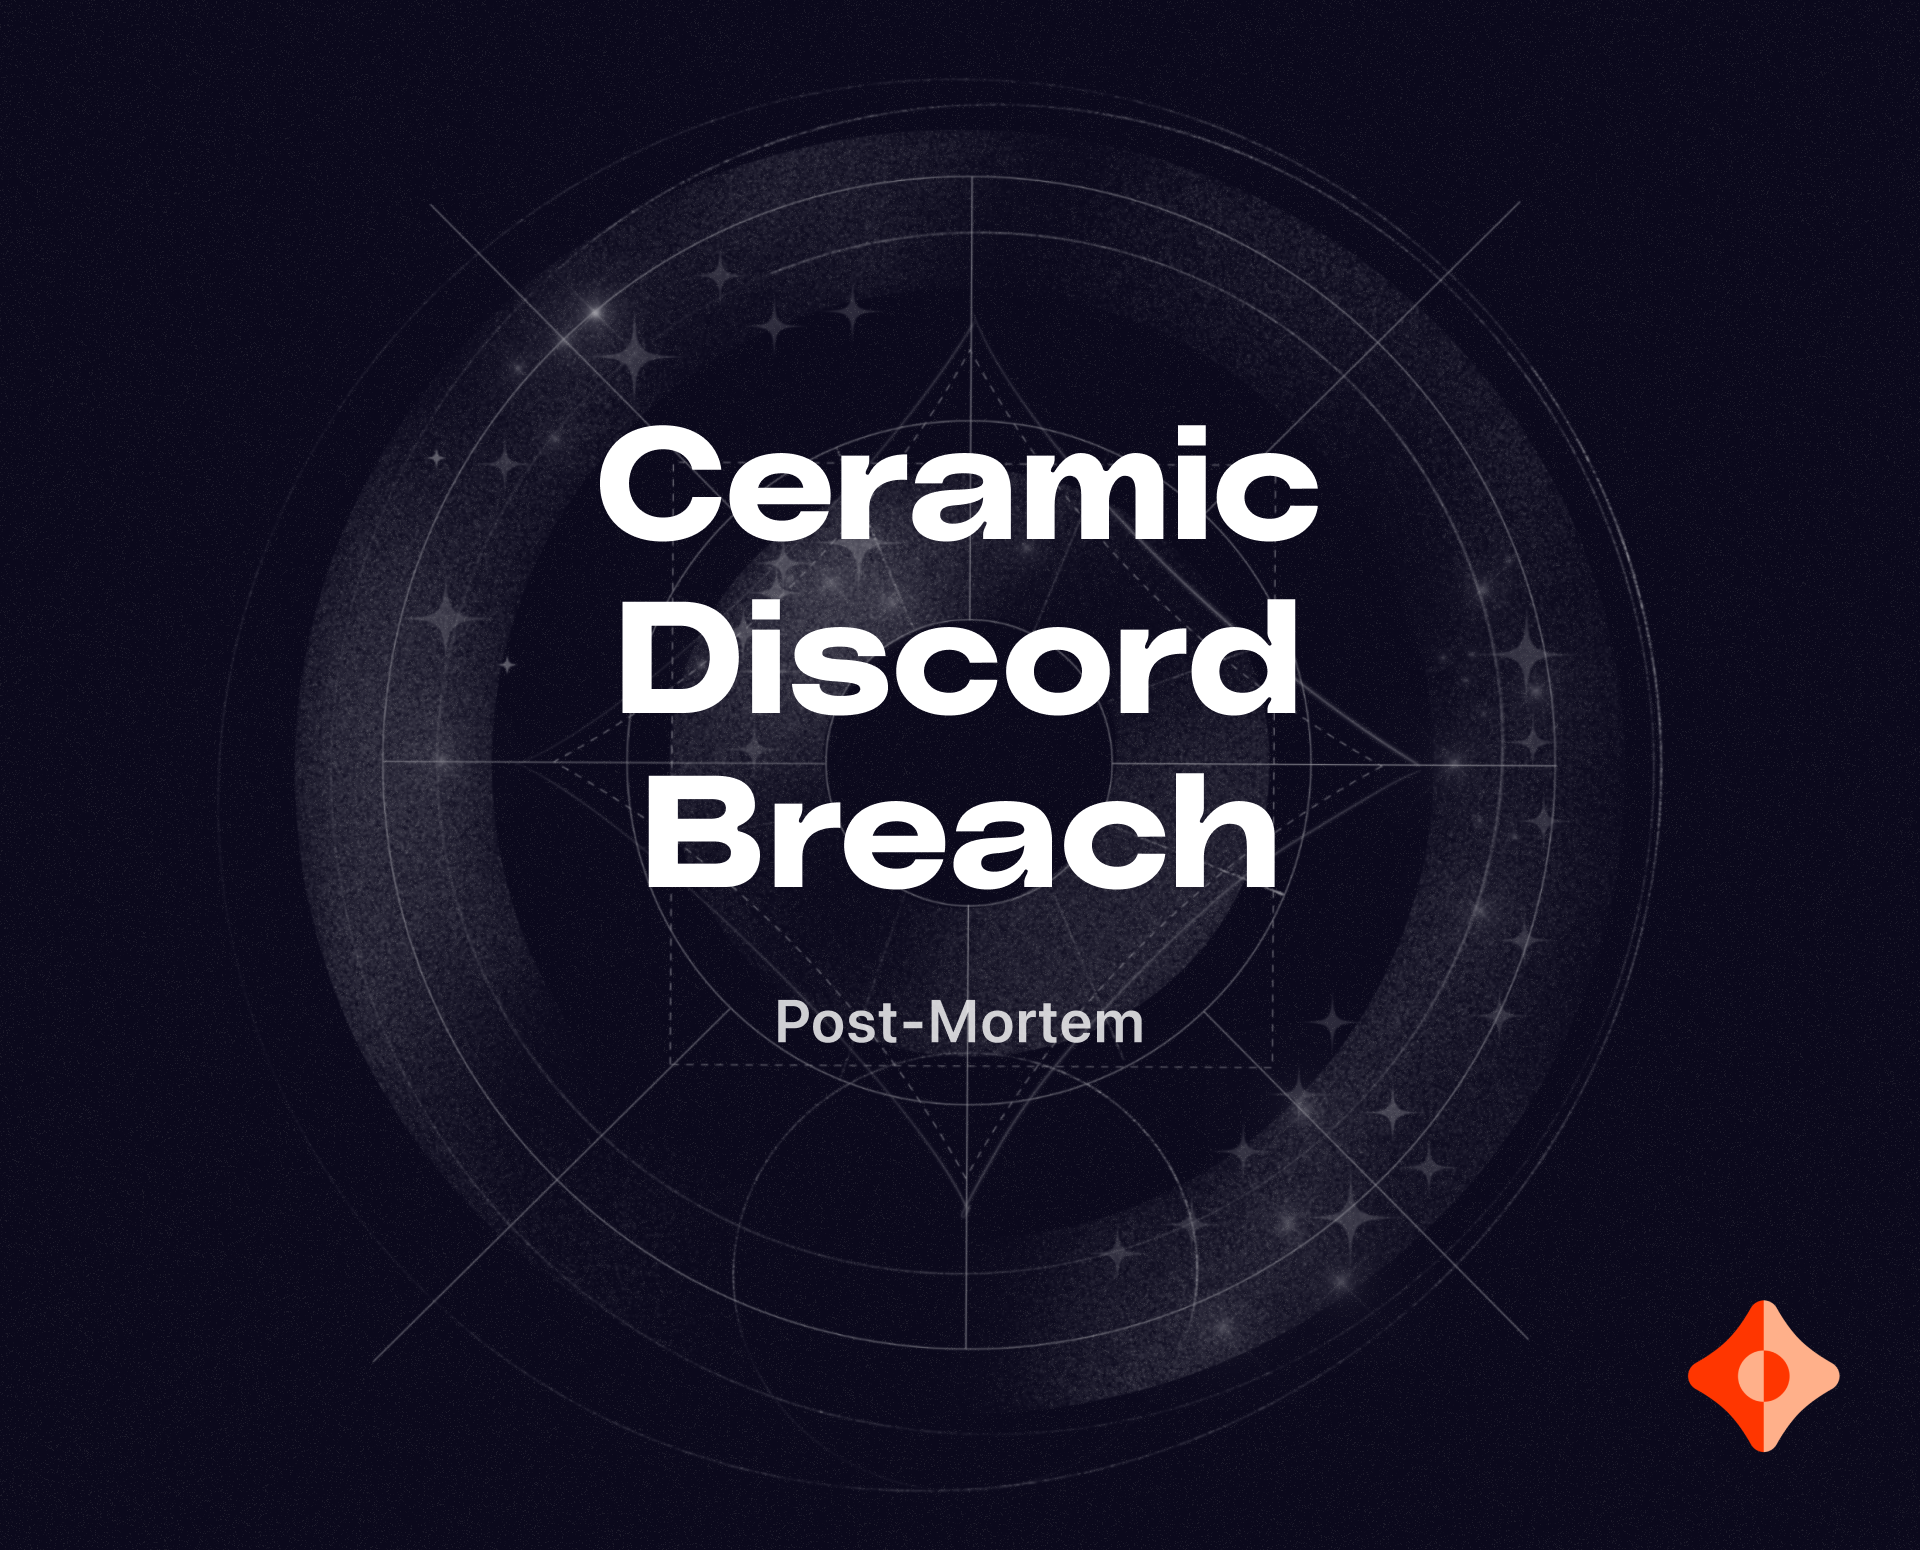 Post-Mortem: Ceramic Discord Breach